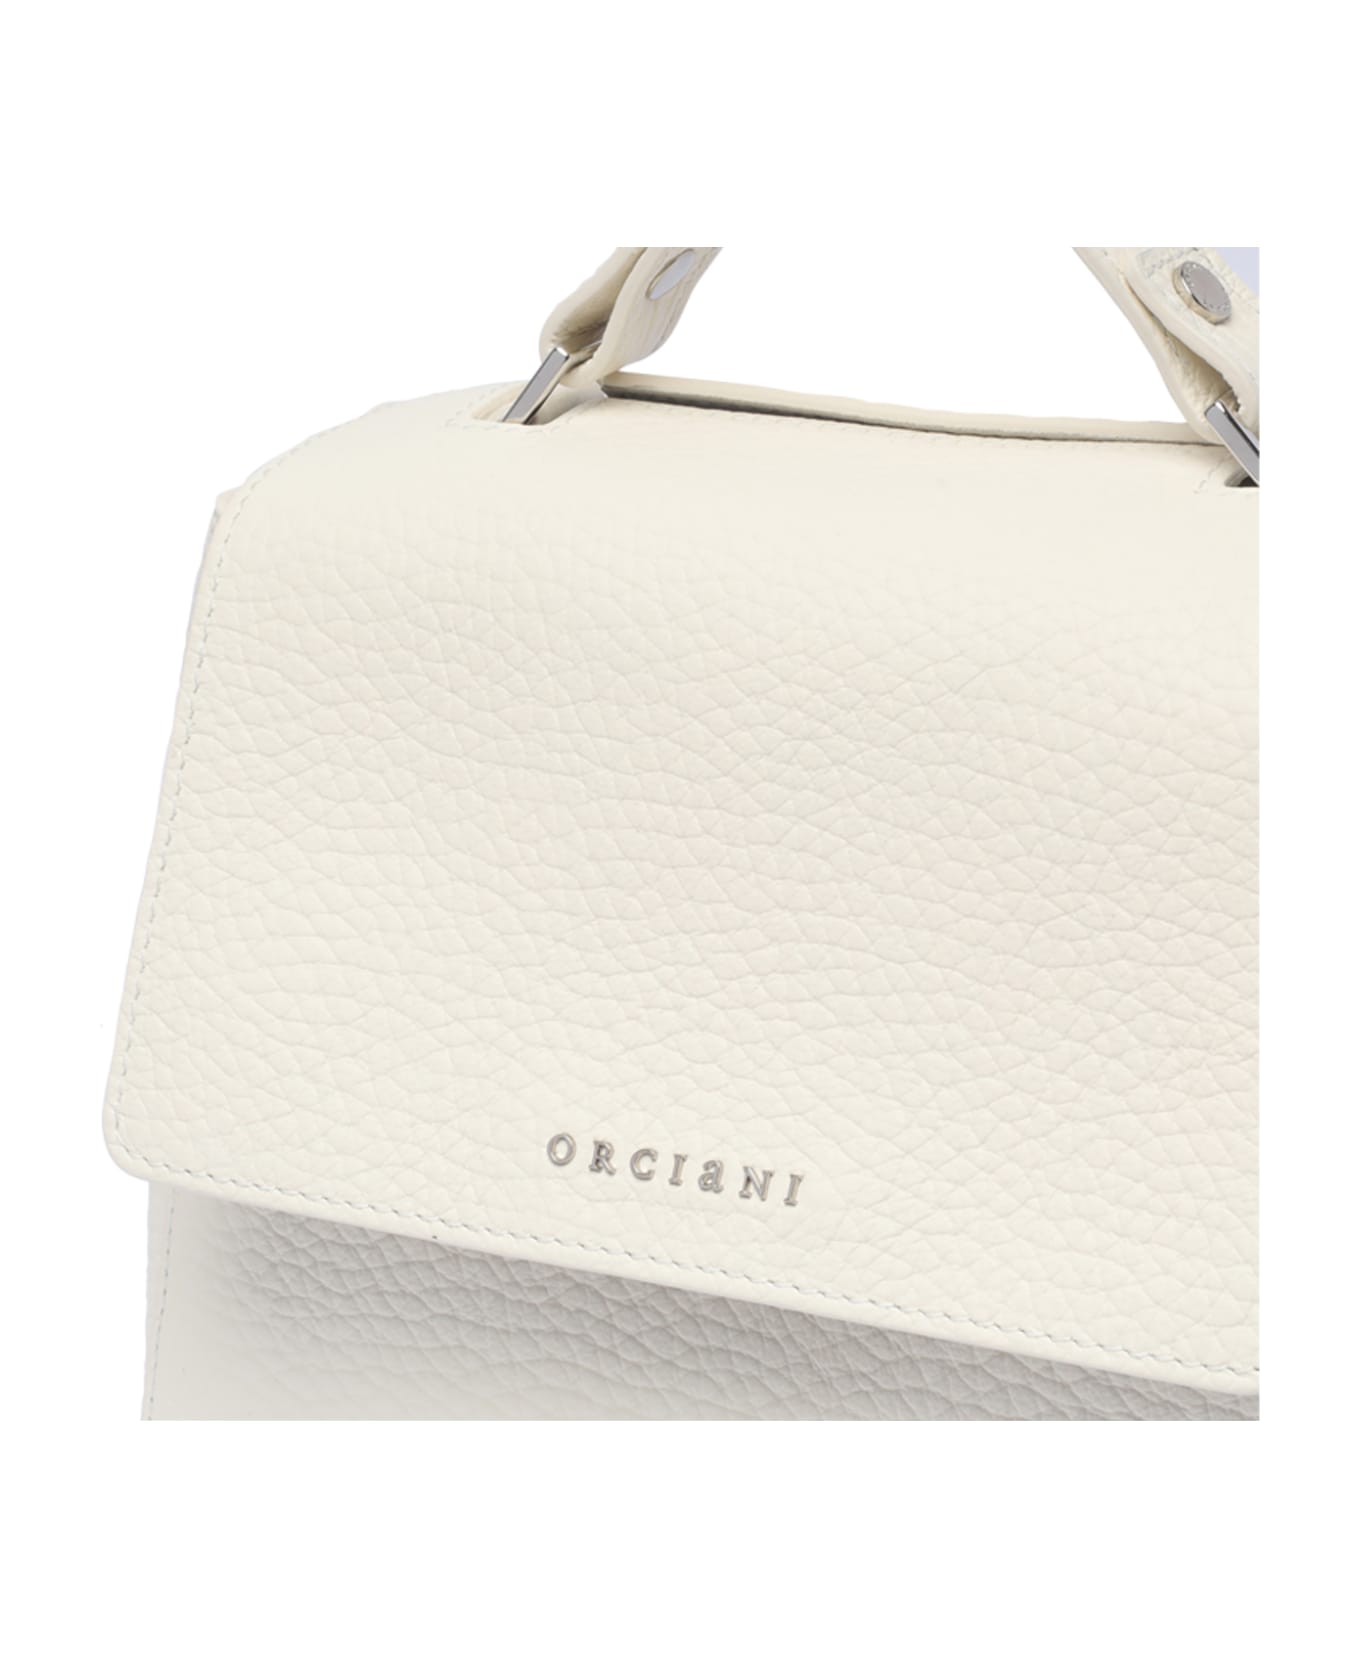 Orciani Soft Sveva Handbag - White トートバッグ